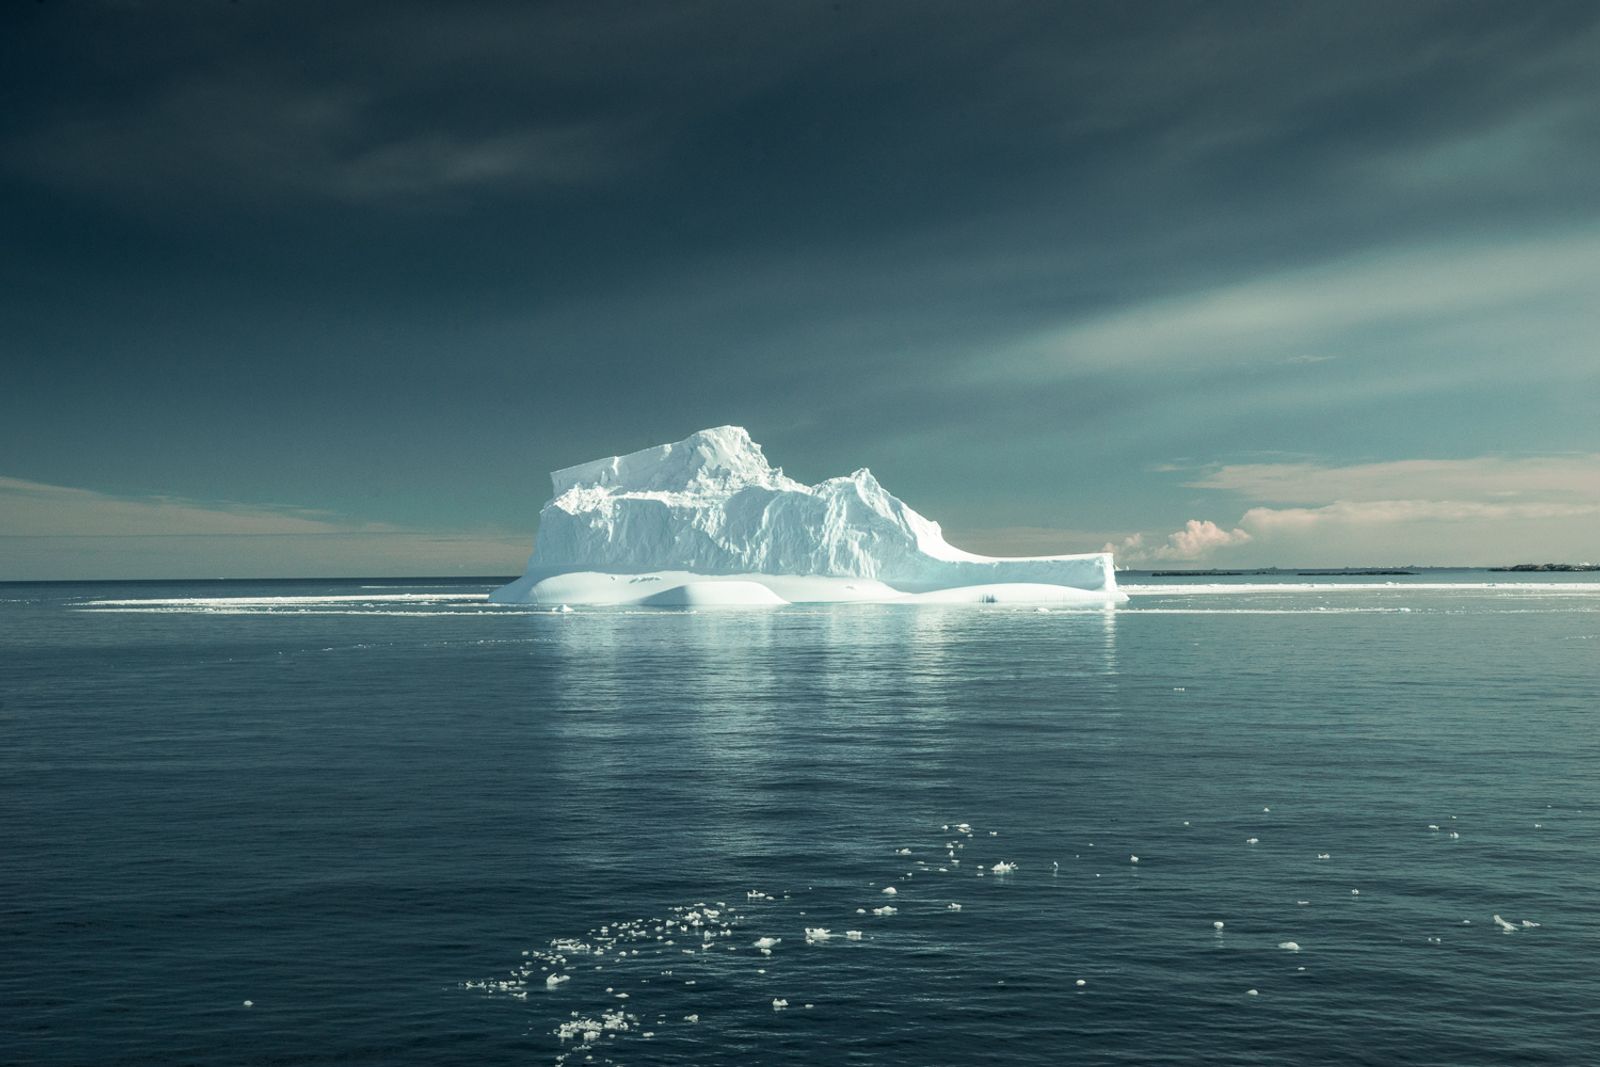 © Isadora Romero - An iceberg several kilometers long floats in the then calm waters surrounding the Antarctic peninsula.